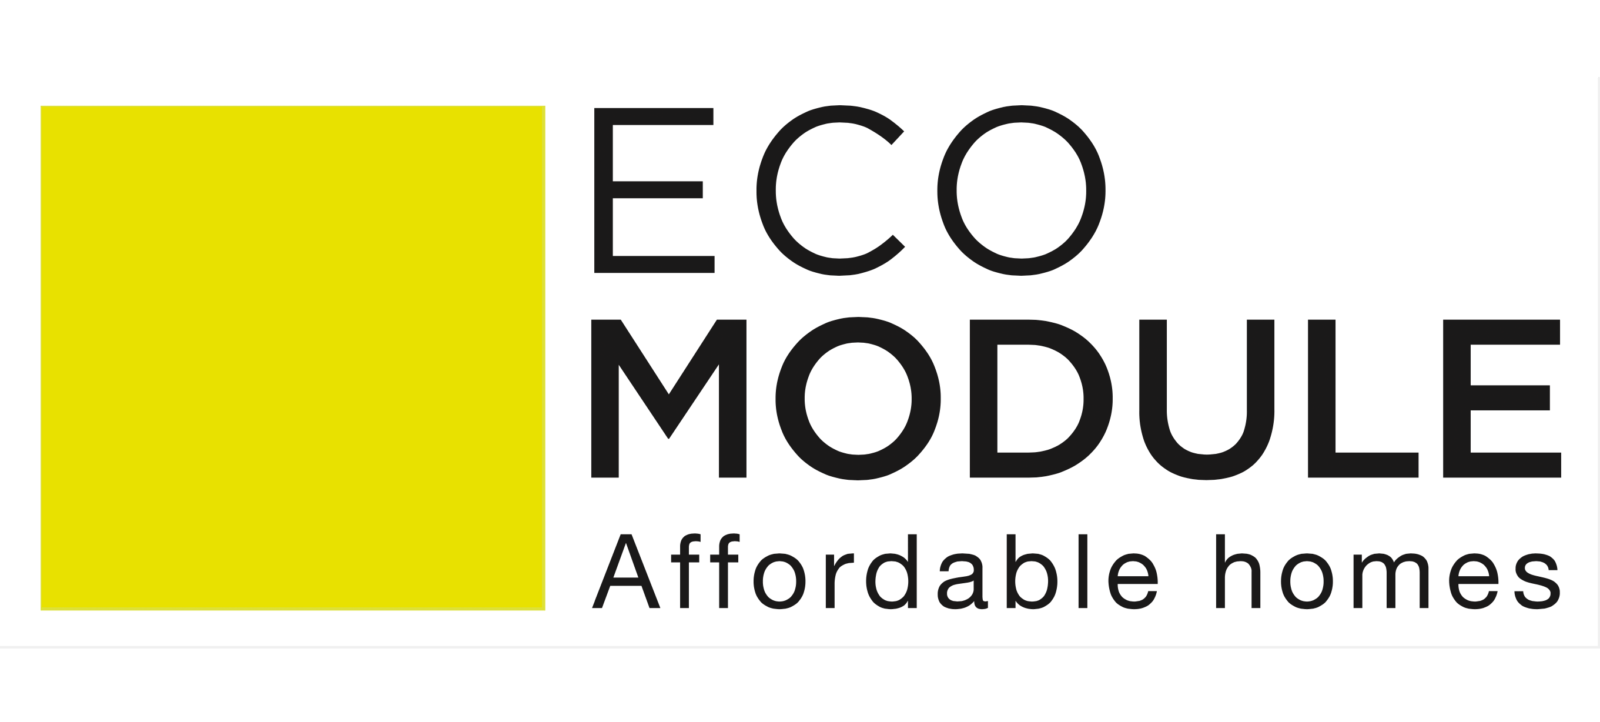 Ecomodule